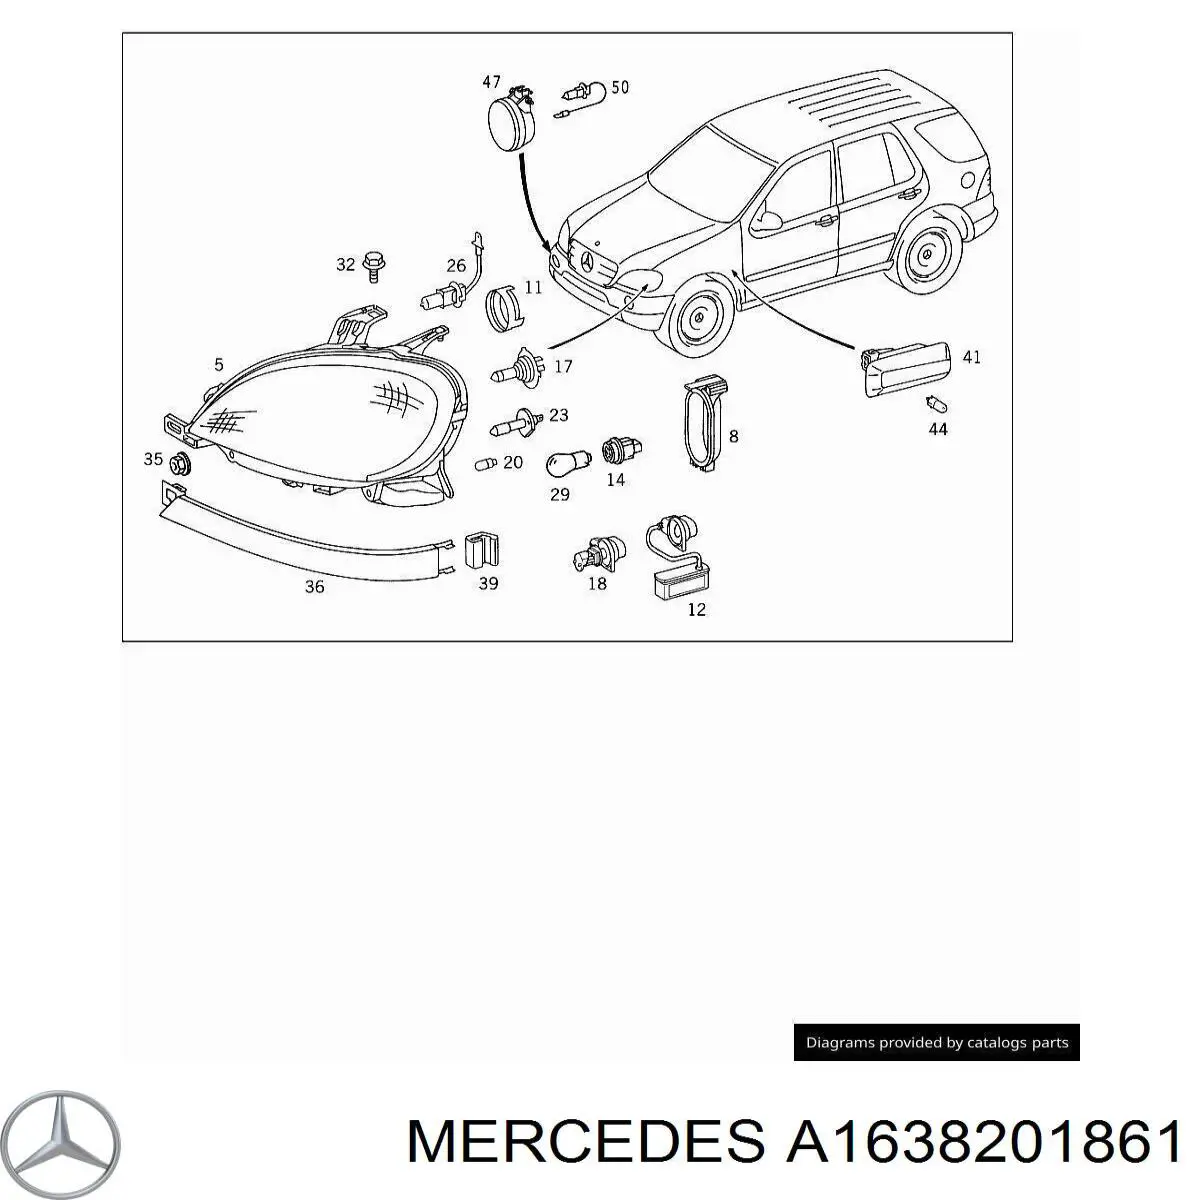 A1638201861 Mercedes faro derecho